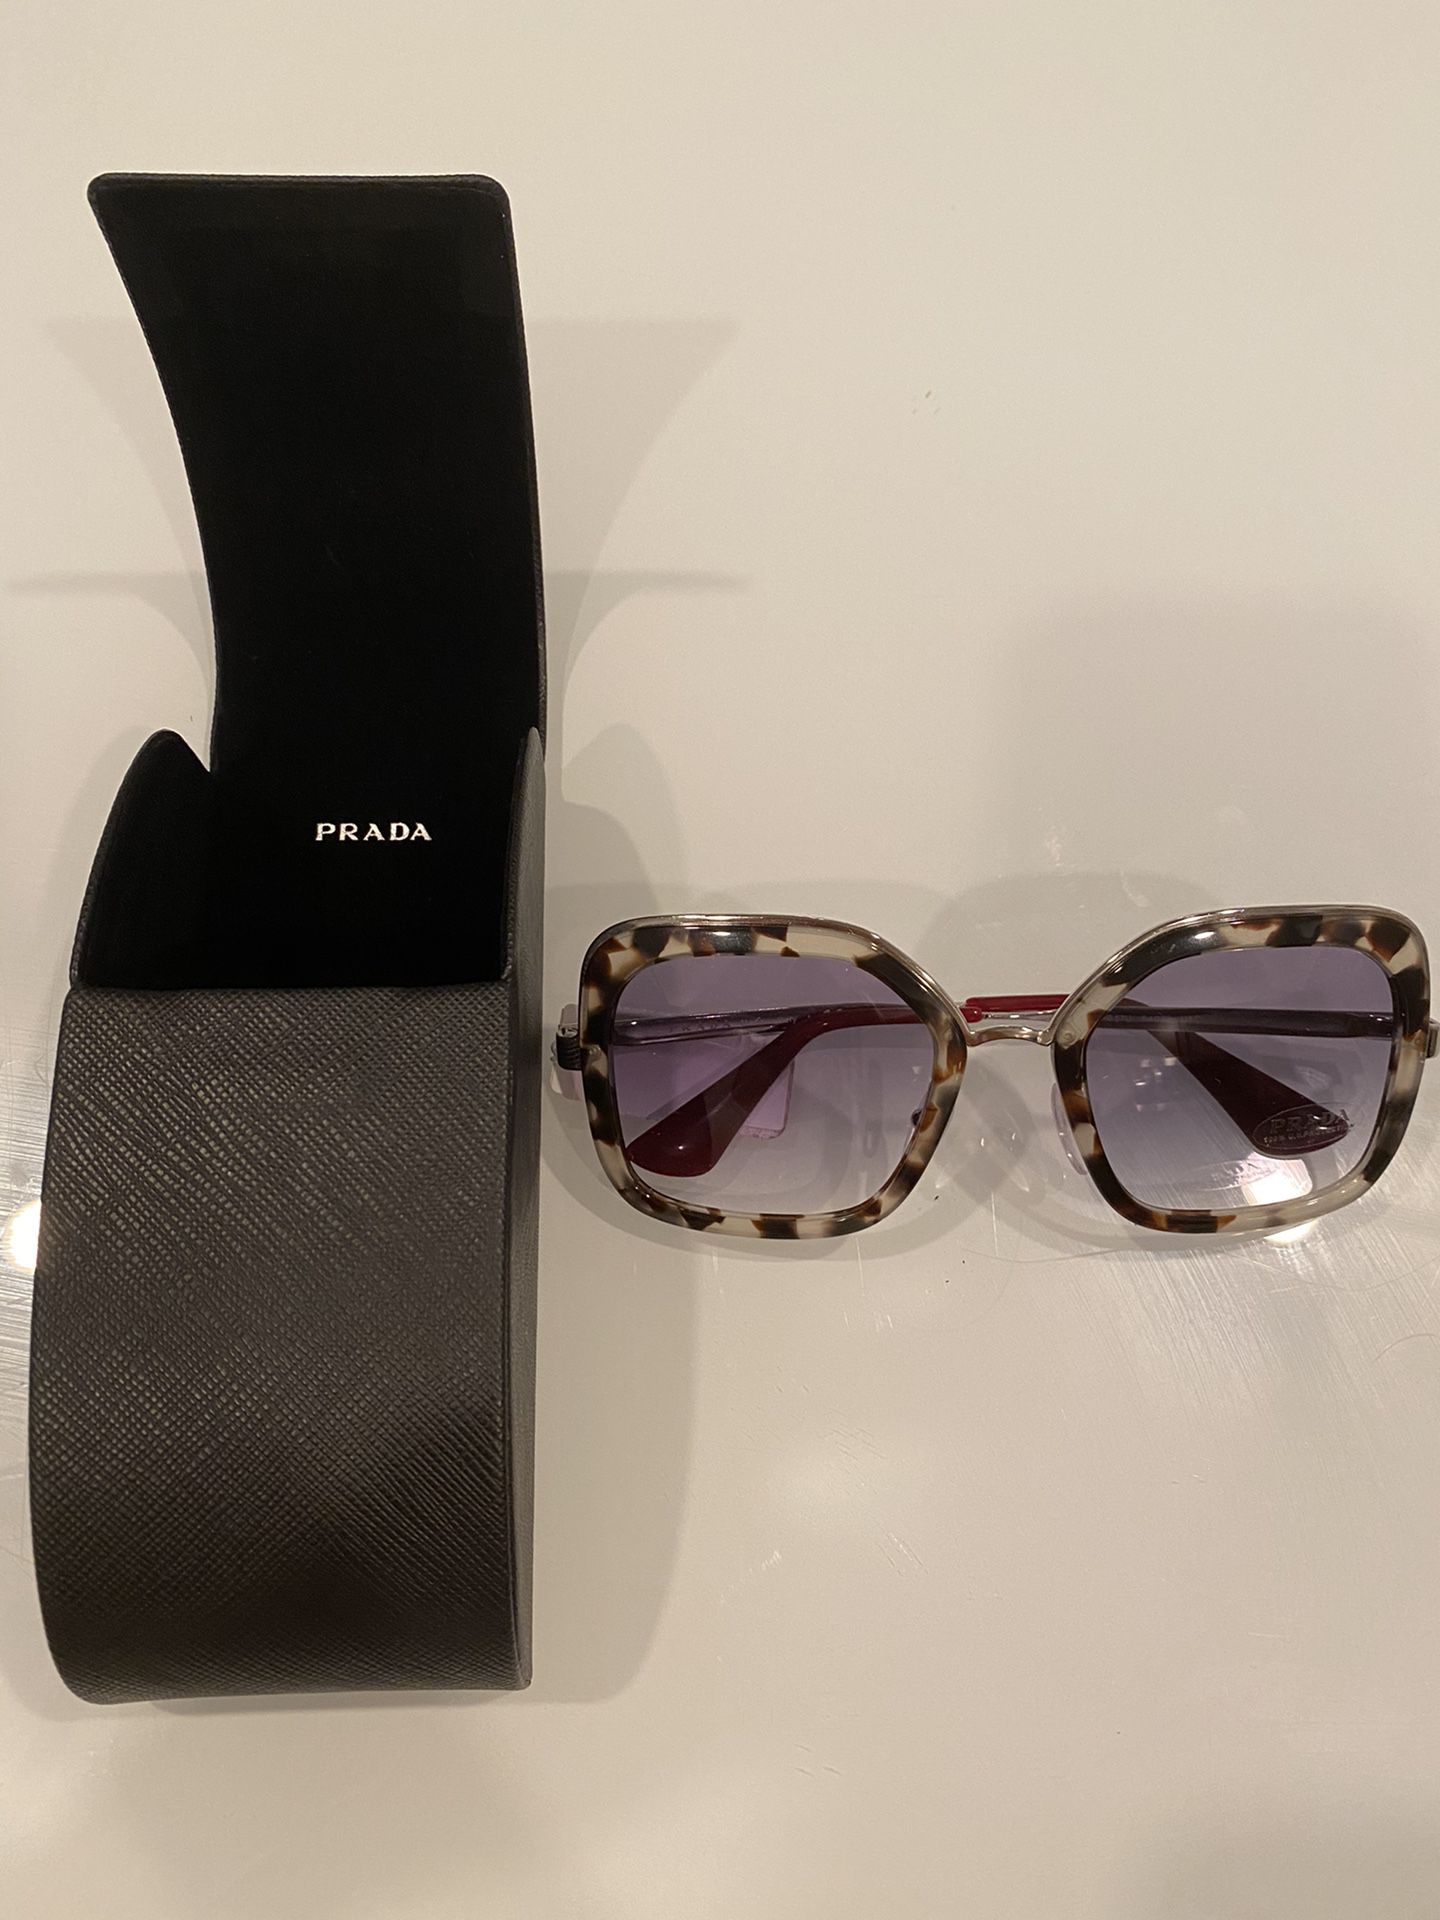 Prada Sunglasses - Brand New - Authentic